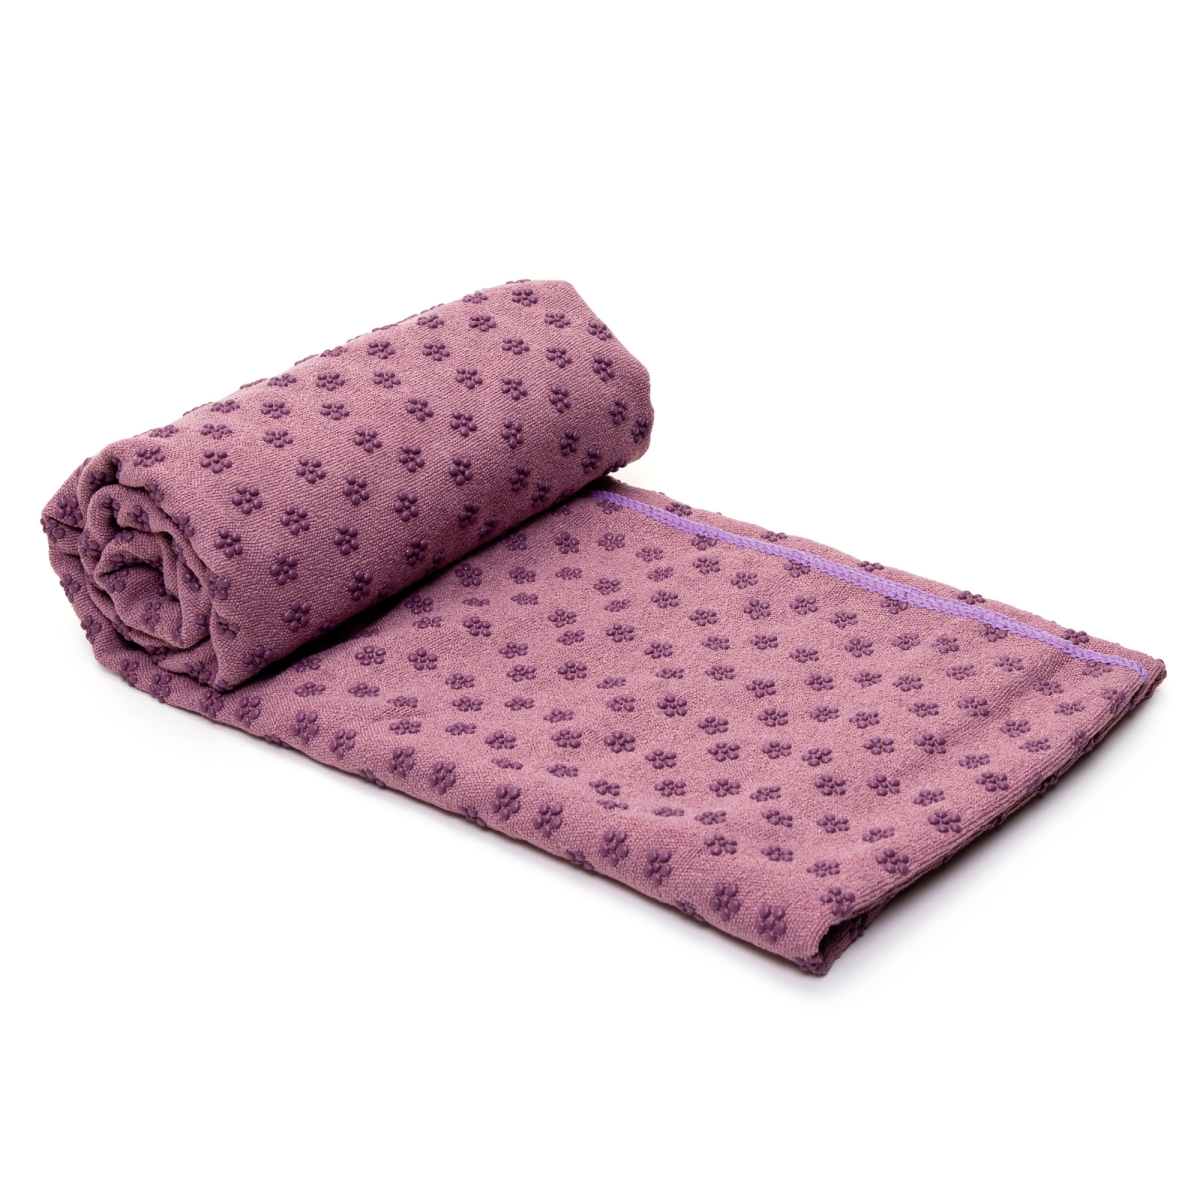 Picture of JupiterGear JG-YOGATWL-SOLID-LGTPRP Premium Absorption Hot Yoga Mat Towel with Slip-Resistant Grip Dots - Light Purple